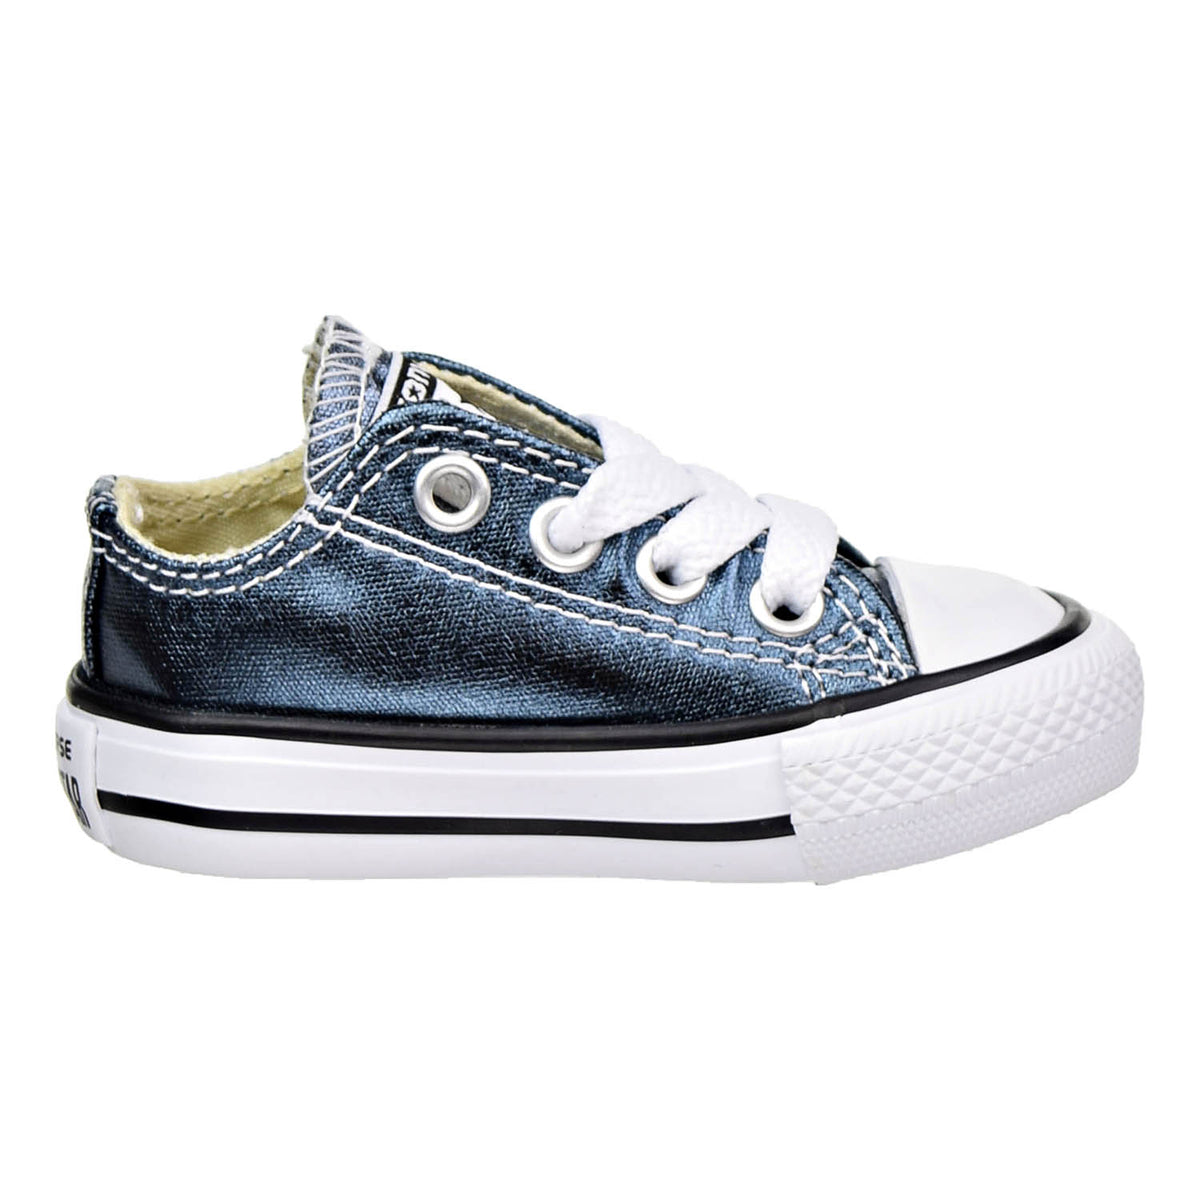 Humoristisch zwaarlijvigheid verzonden Converse Chuck Taylor All Star OX Infants Shoes Blue Fir/White/Black